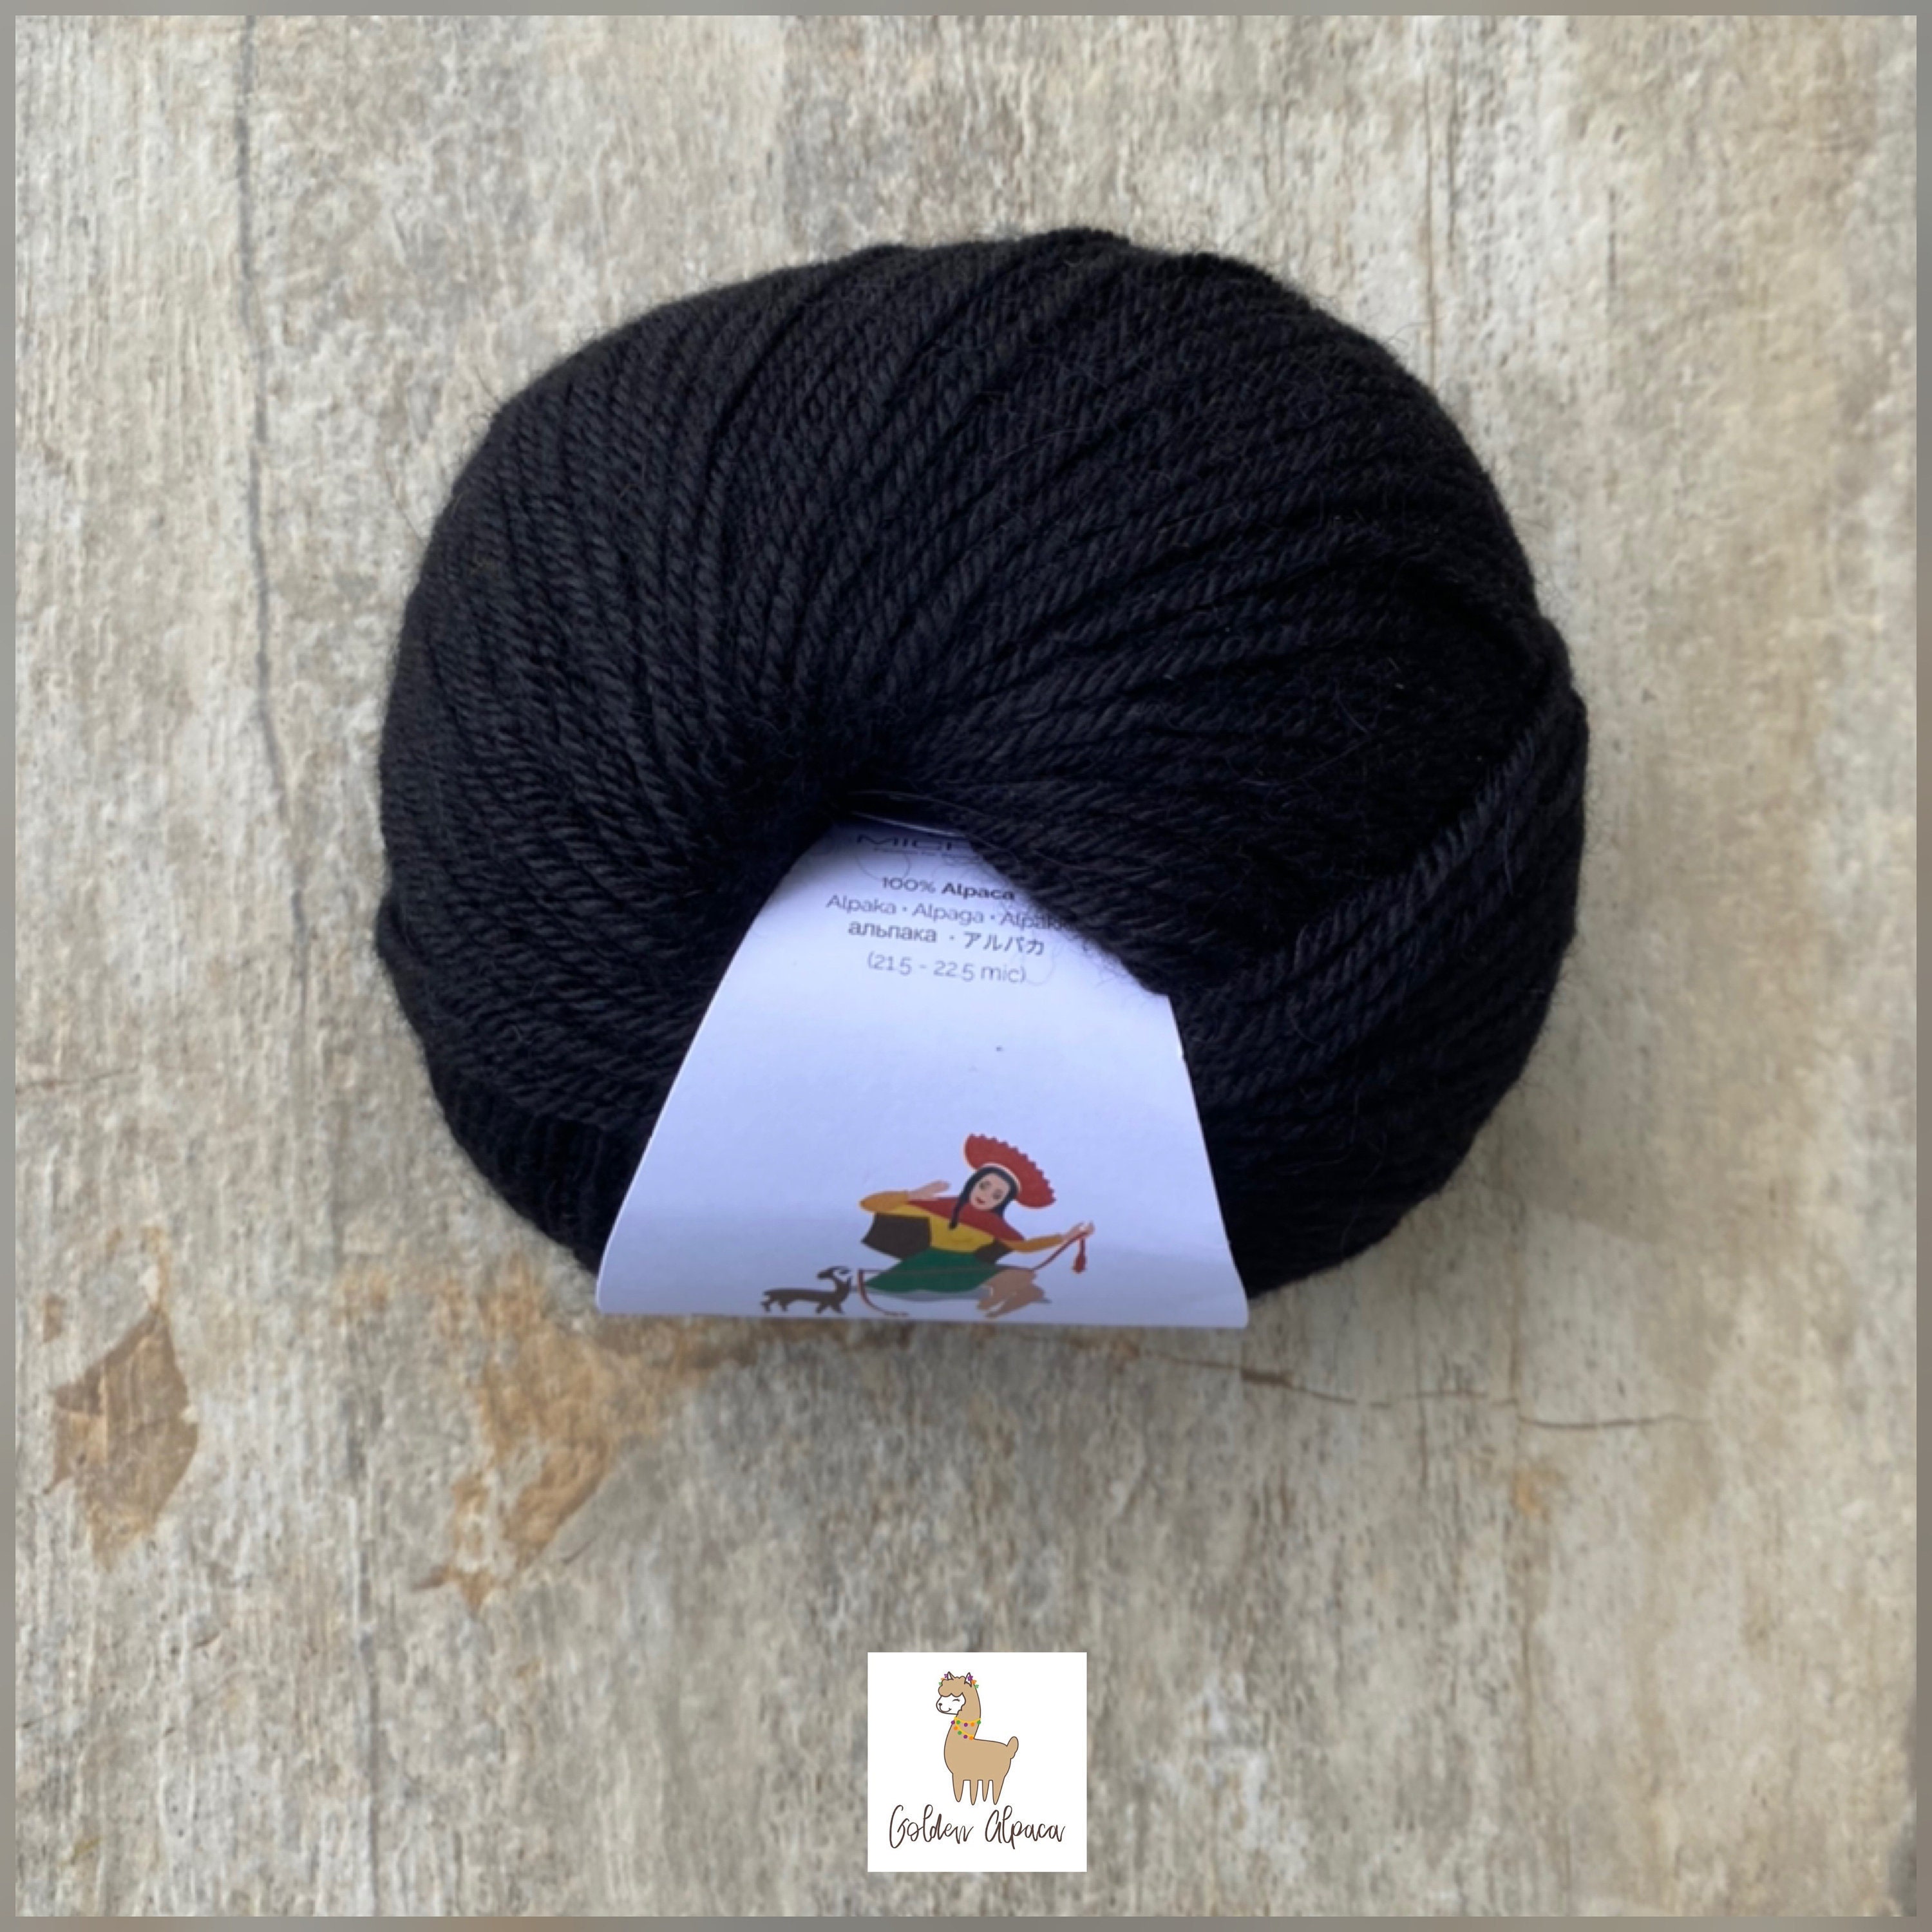 Black Baby Alpaca Yarn From Peru for Crocheting or Knitting/ 